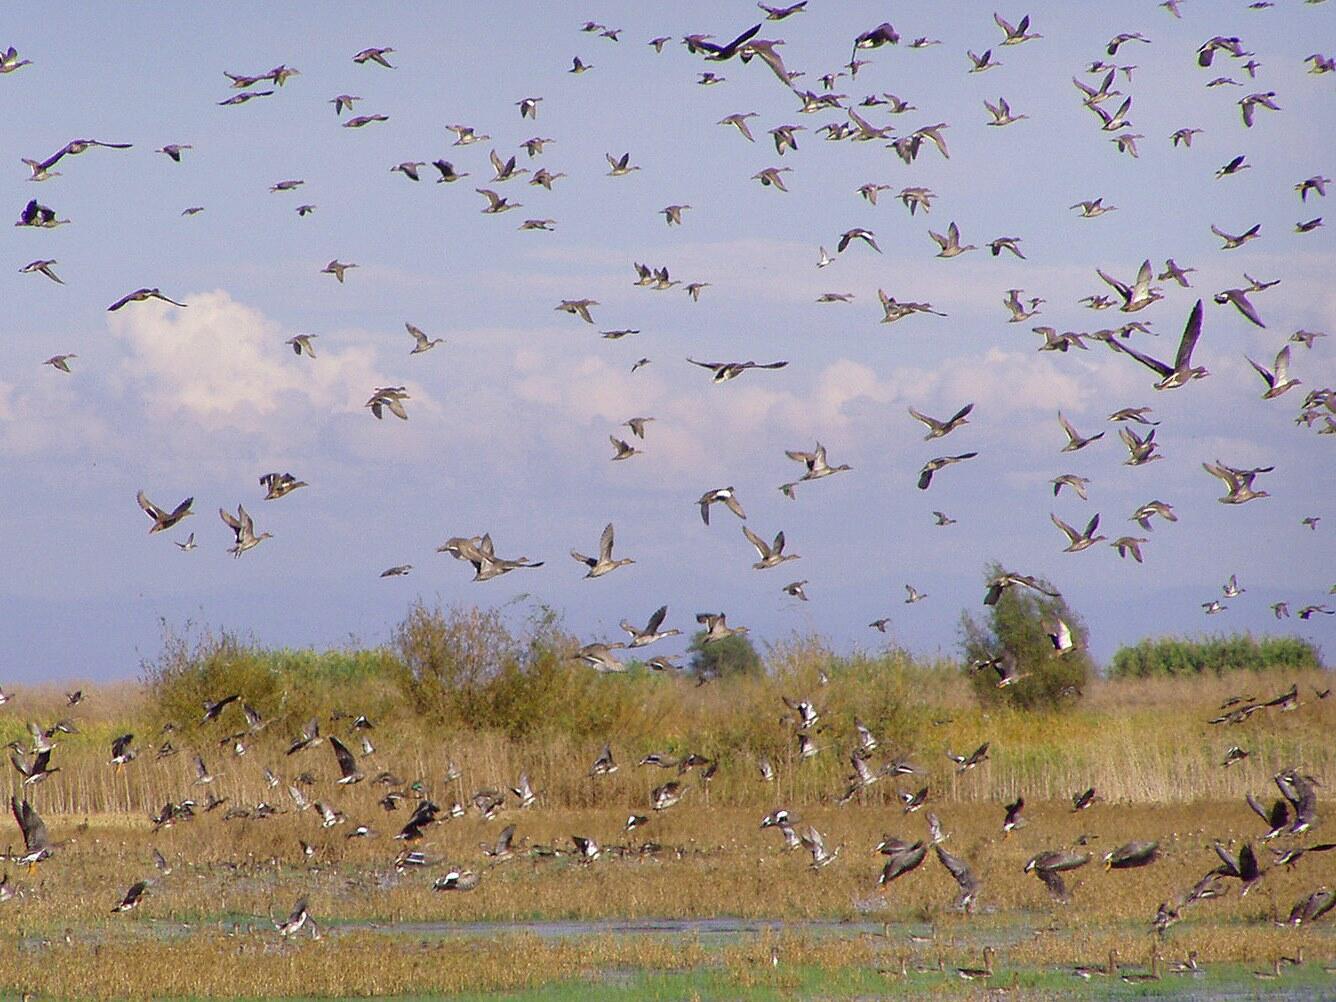 Dozens of birds flying over grassy wetlands